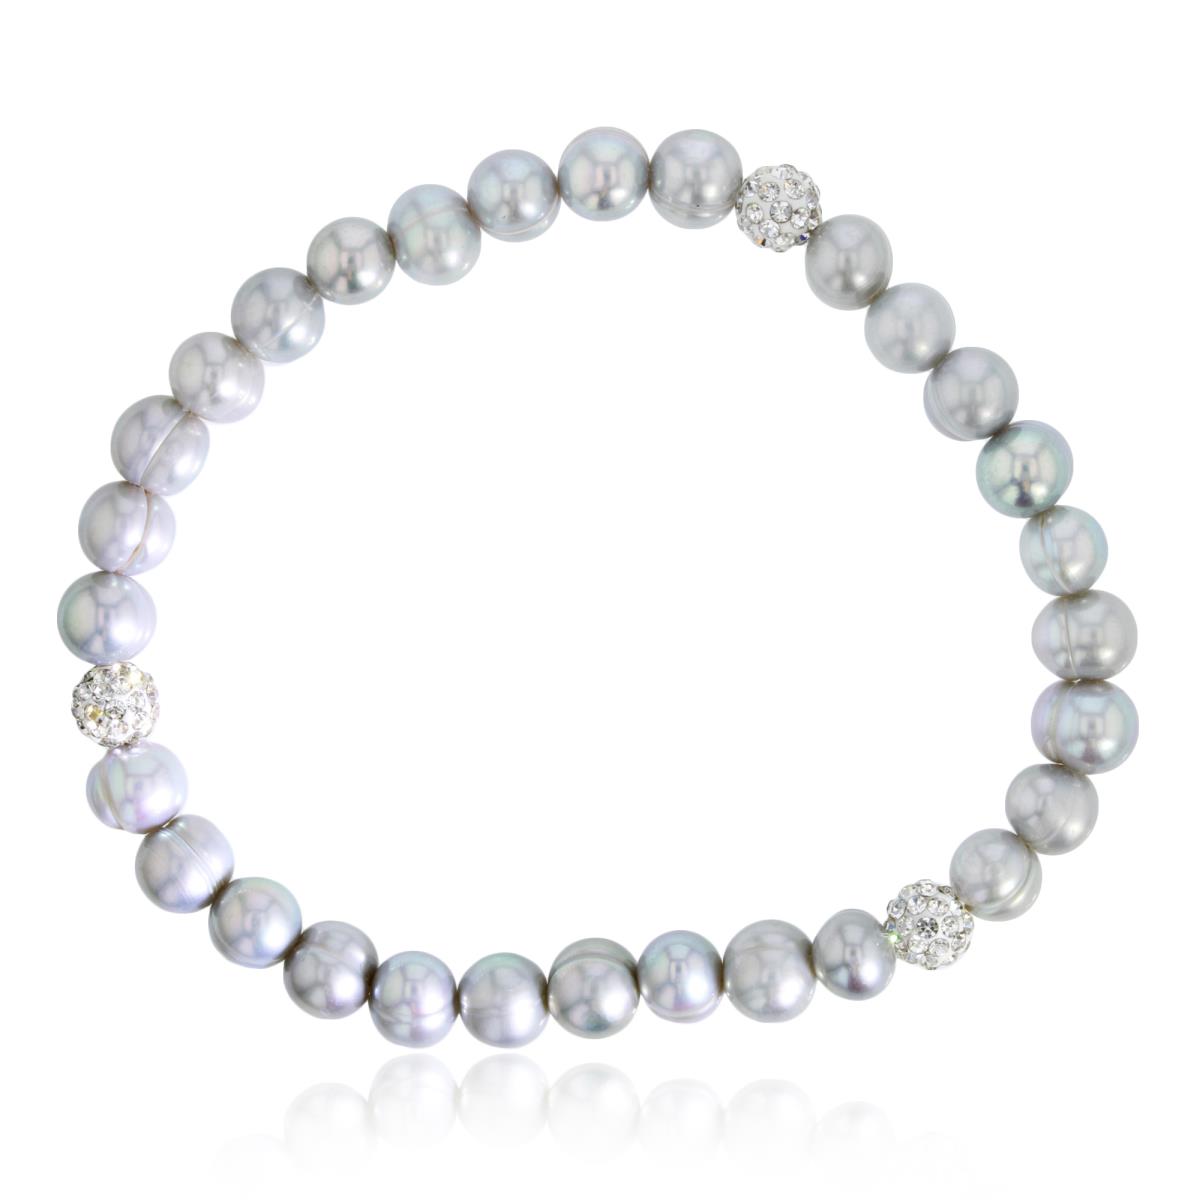 6-7mm Near Round Gray Fresh Water Pearls & Crystal Balls Stretchy Bracelet